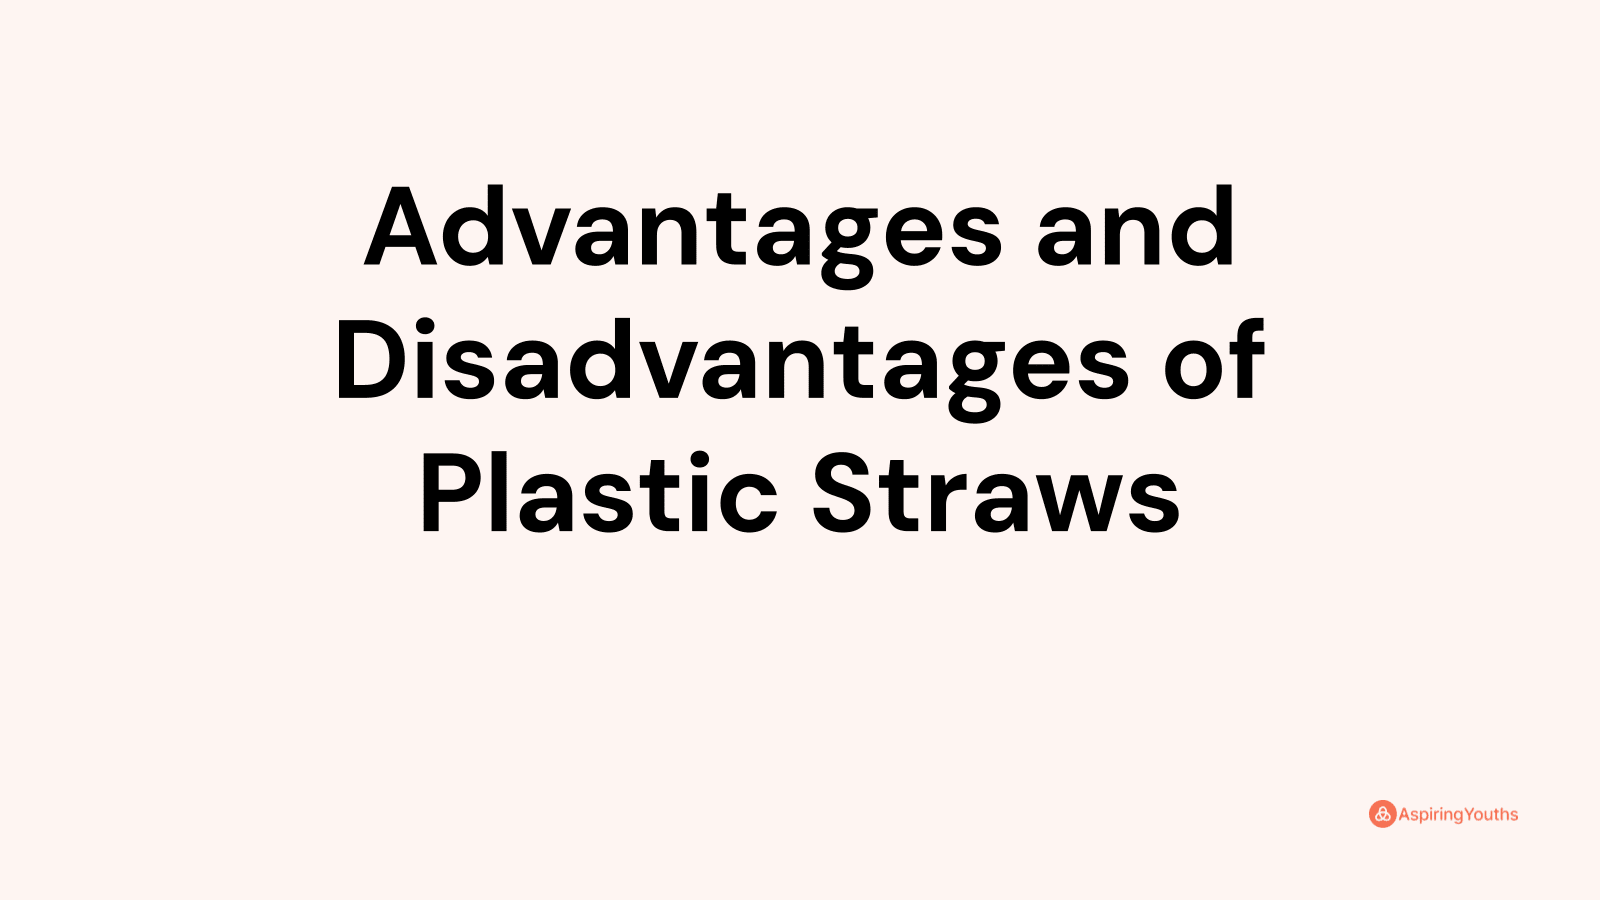 Advantages and disadvantages of Plastic Straws